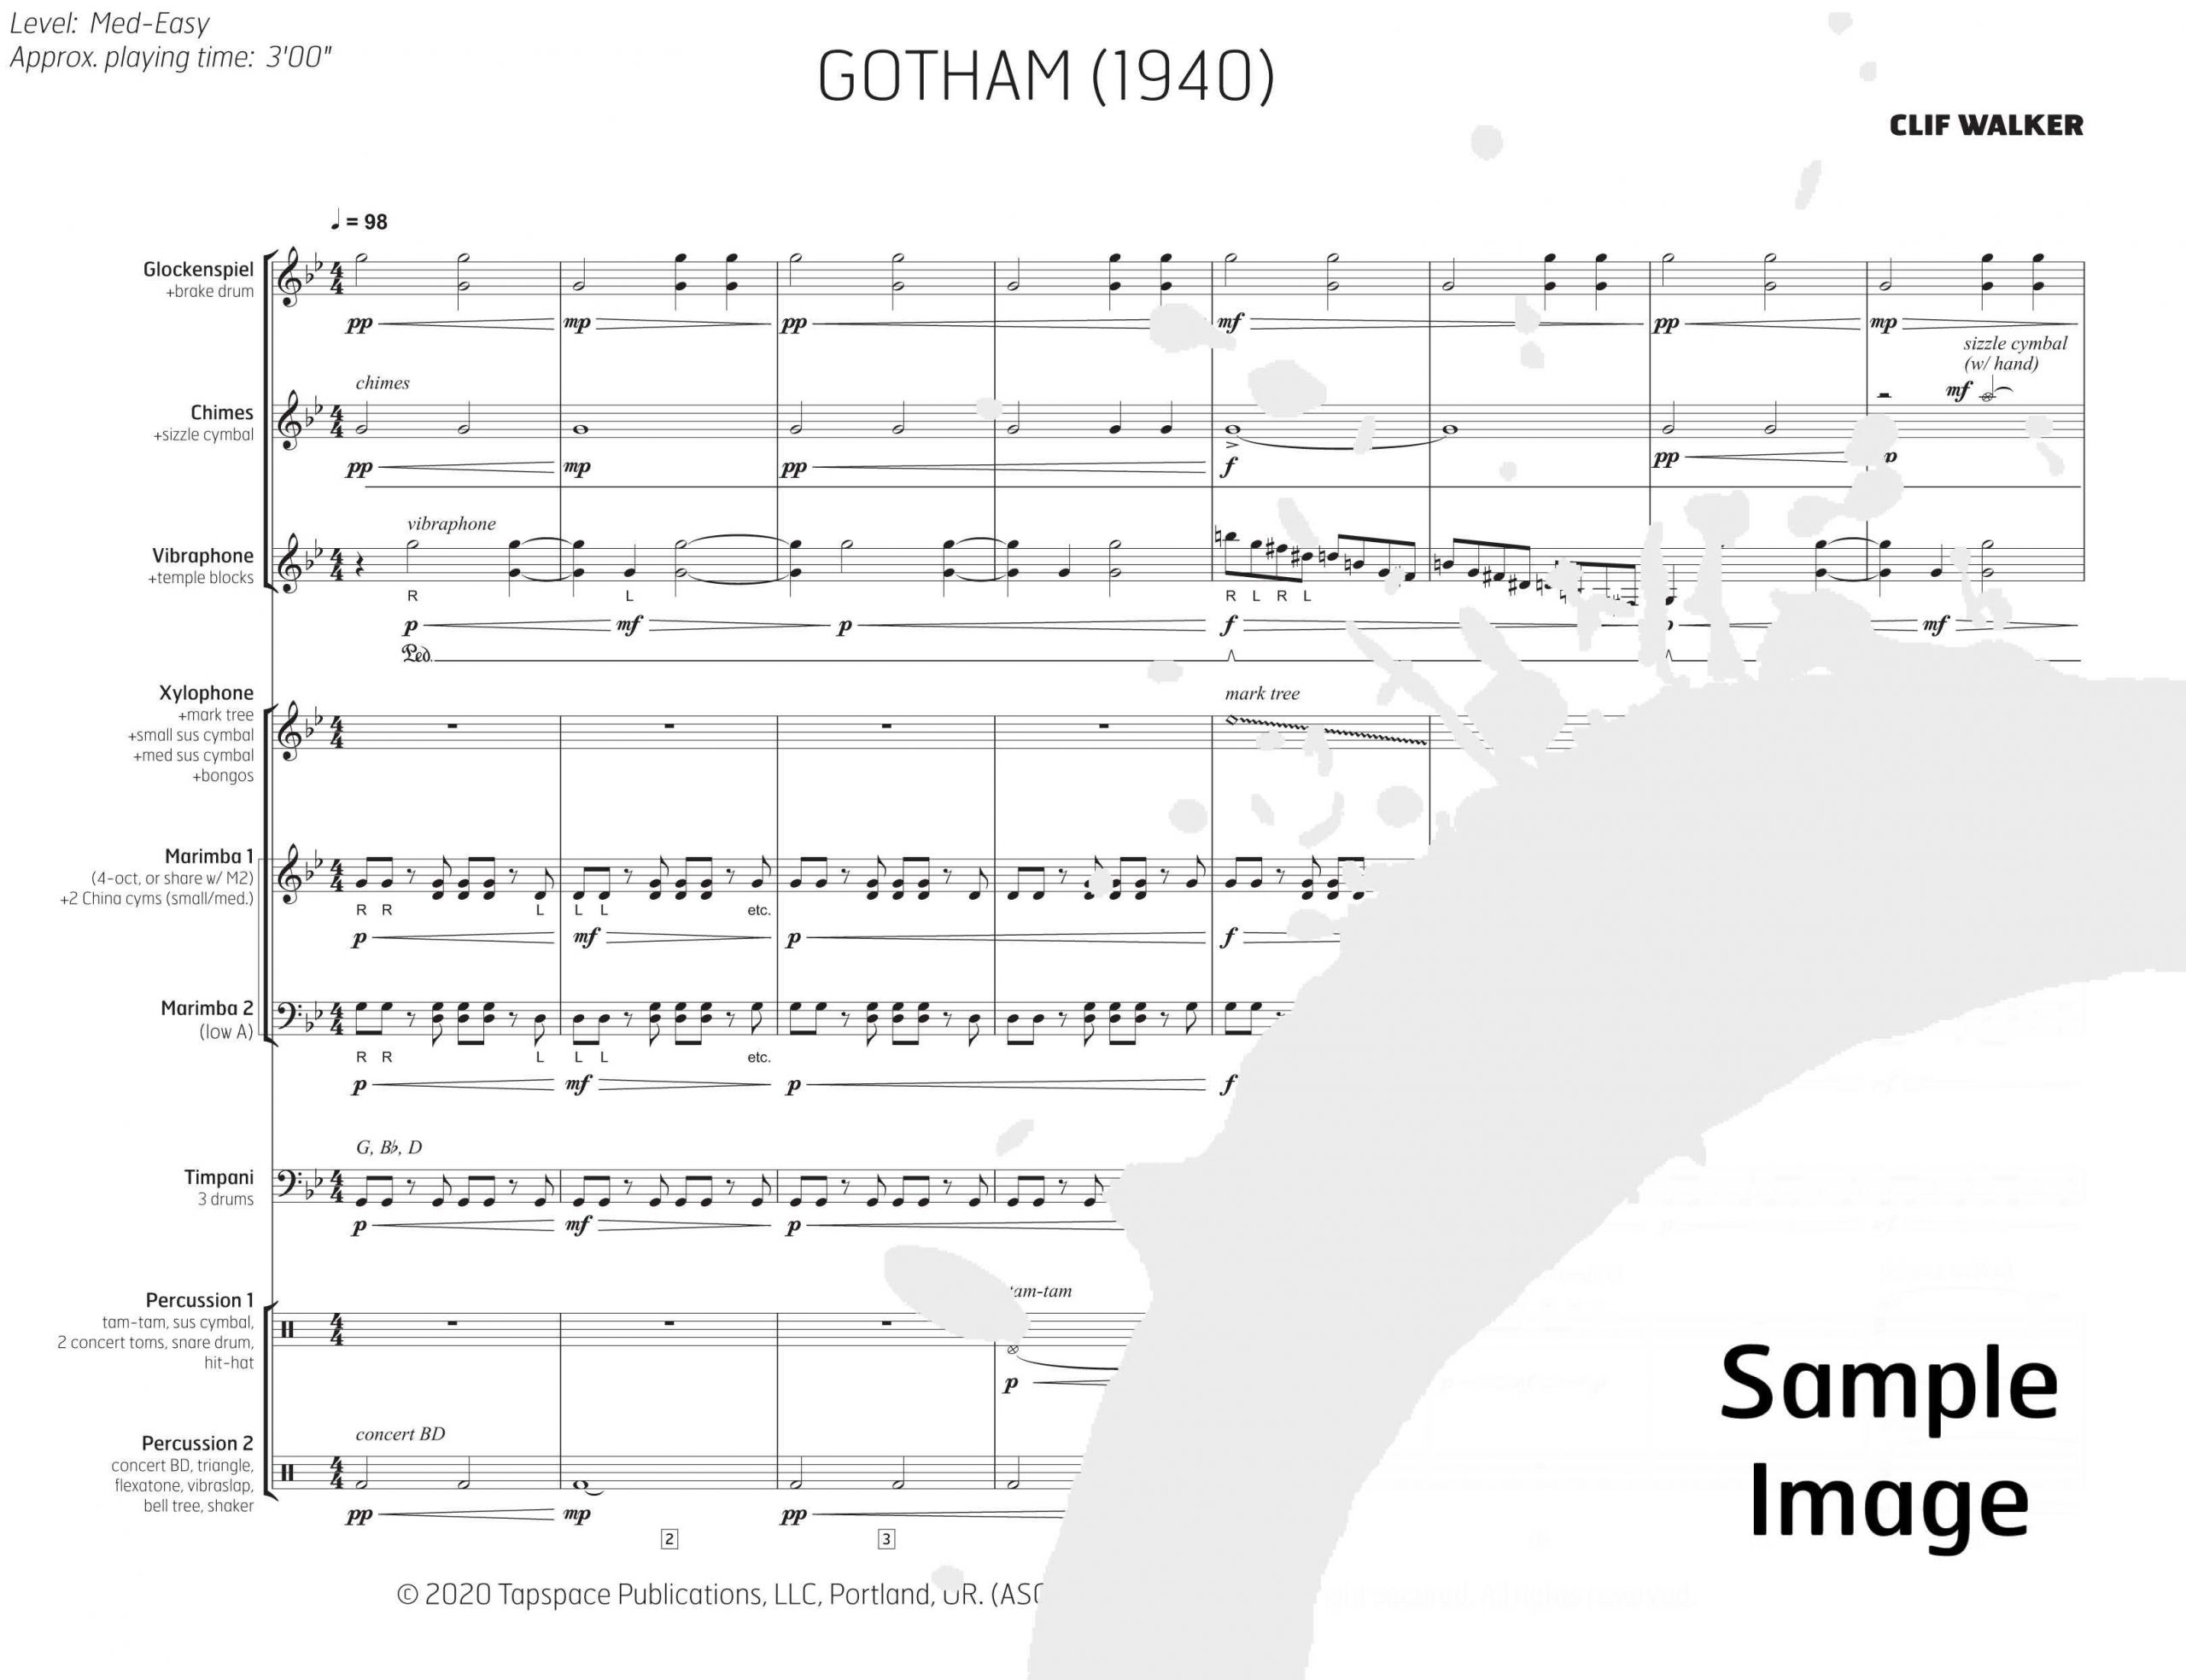 Gotham (1940) by Cliff Walker